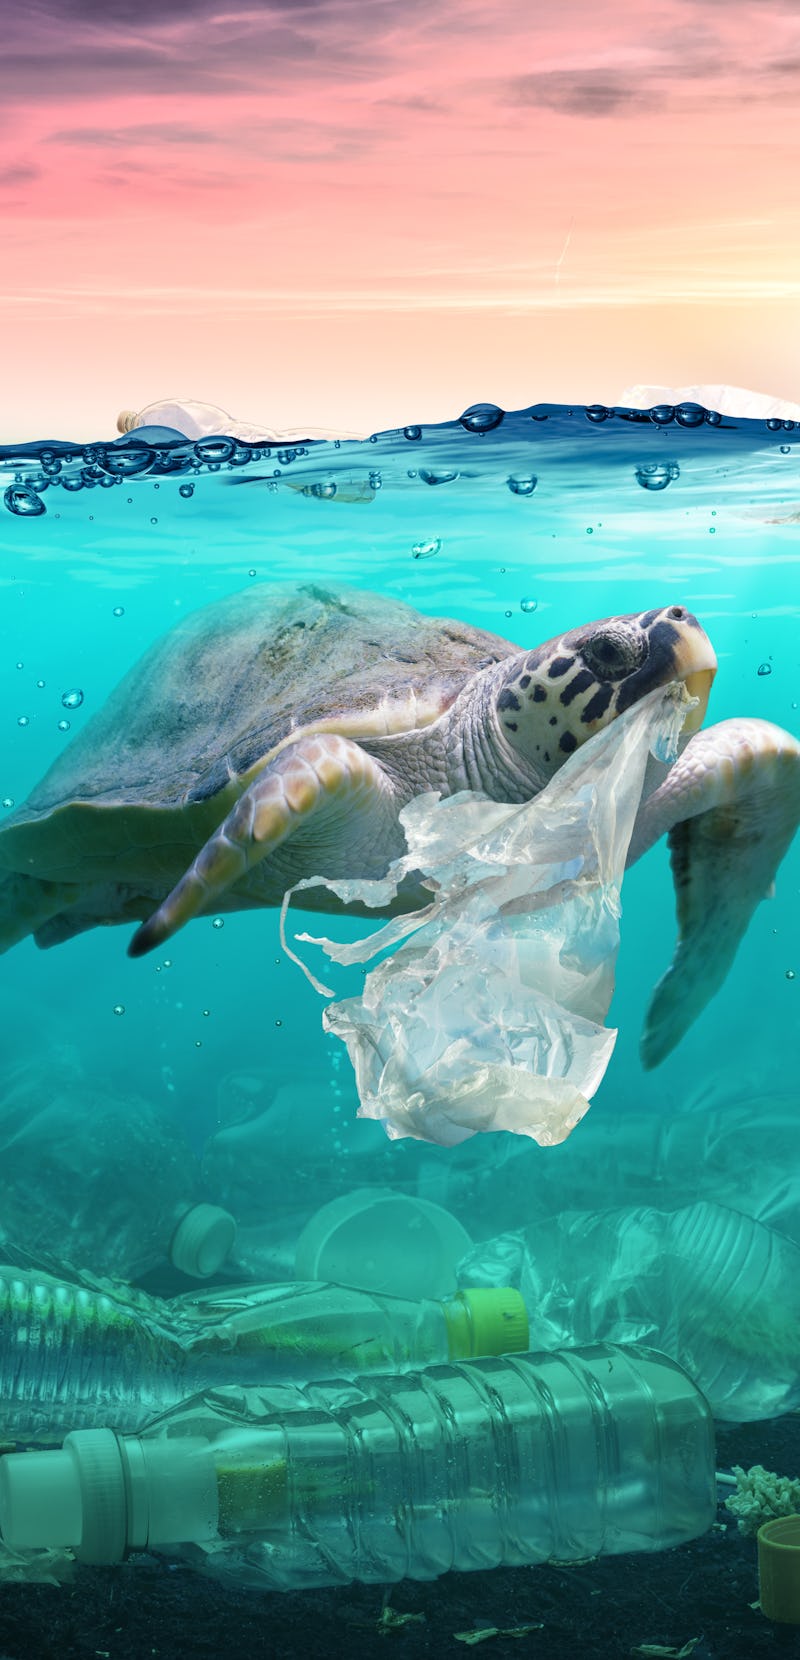 Plastic Pollution In Ocean - Turtle Eat Plastic Bag - Environmental Problem
